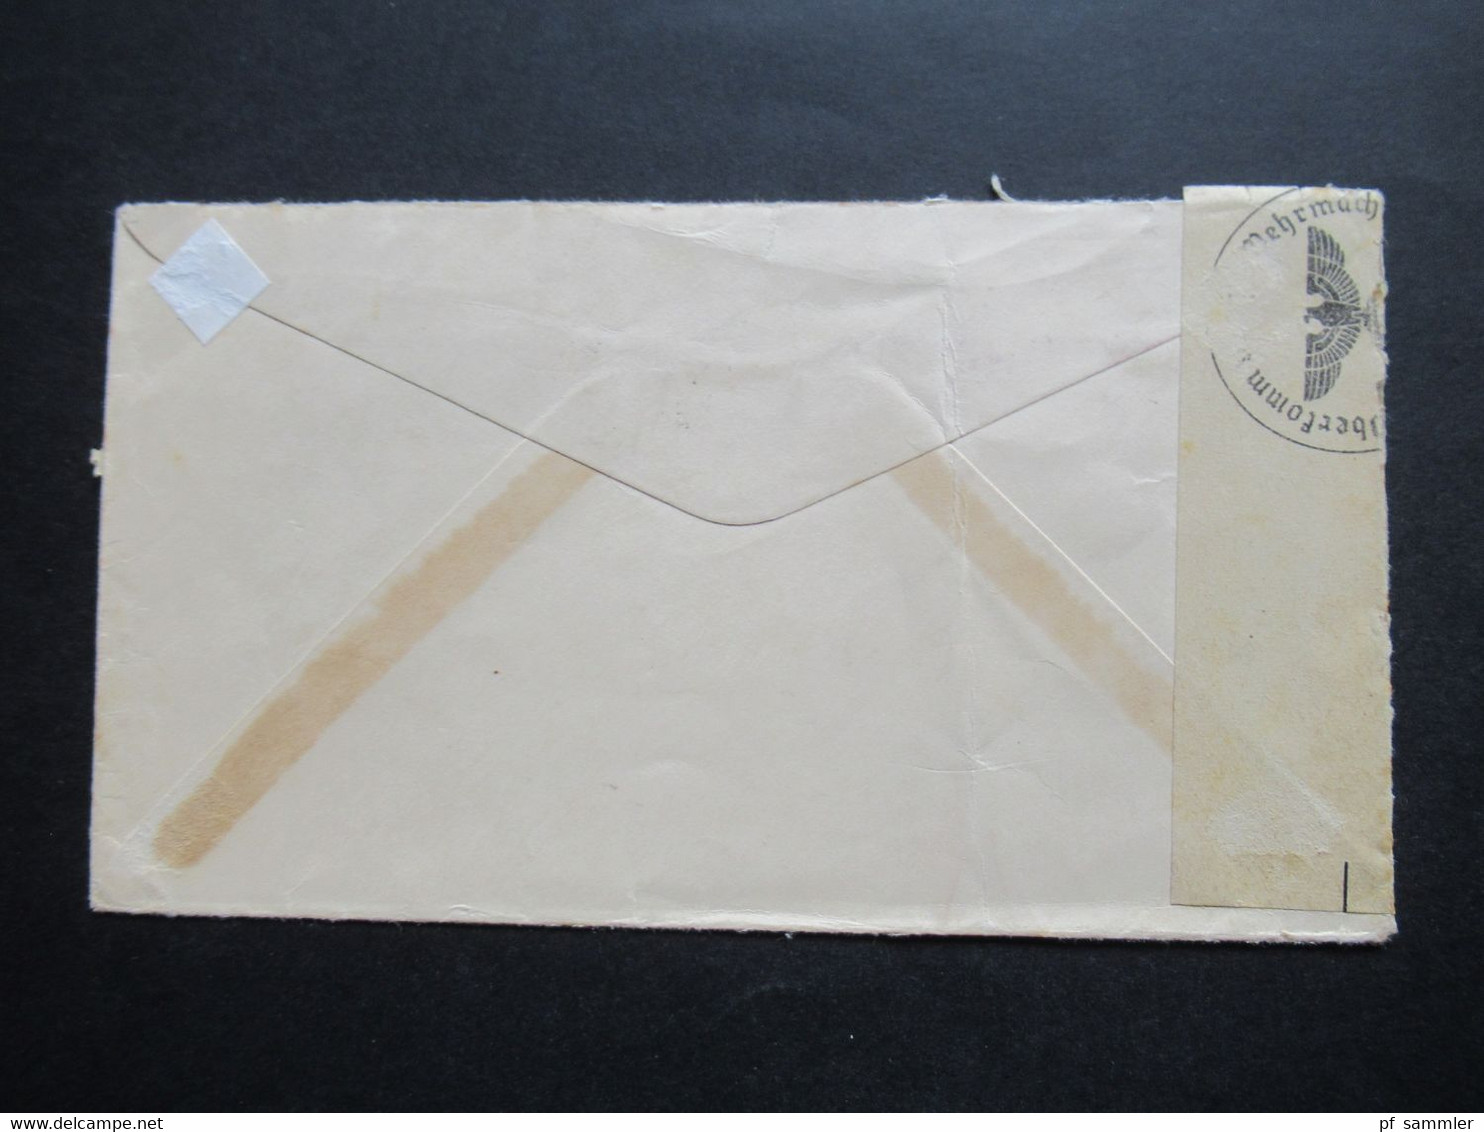 USA 1939 Zensurbeleg Air Mail By Clipper OKW Zensur Nach Bodenmais Adolf Hitler Platz 9 Flugpostmarke Trans Atlantic - Lettres & Documents